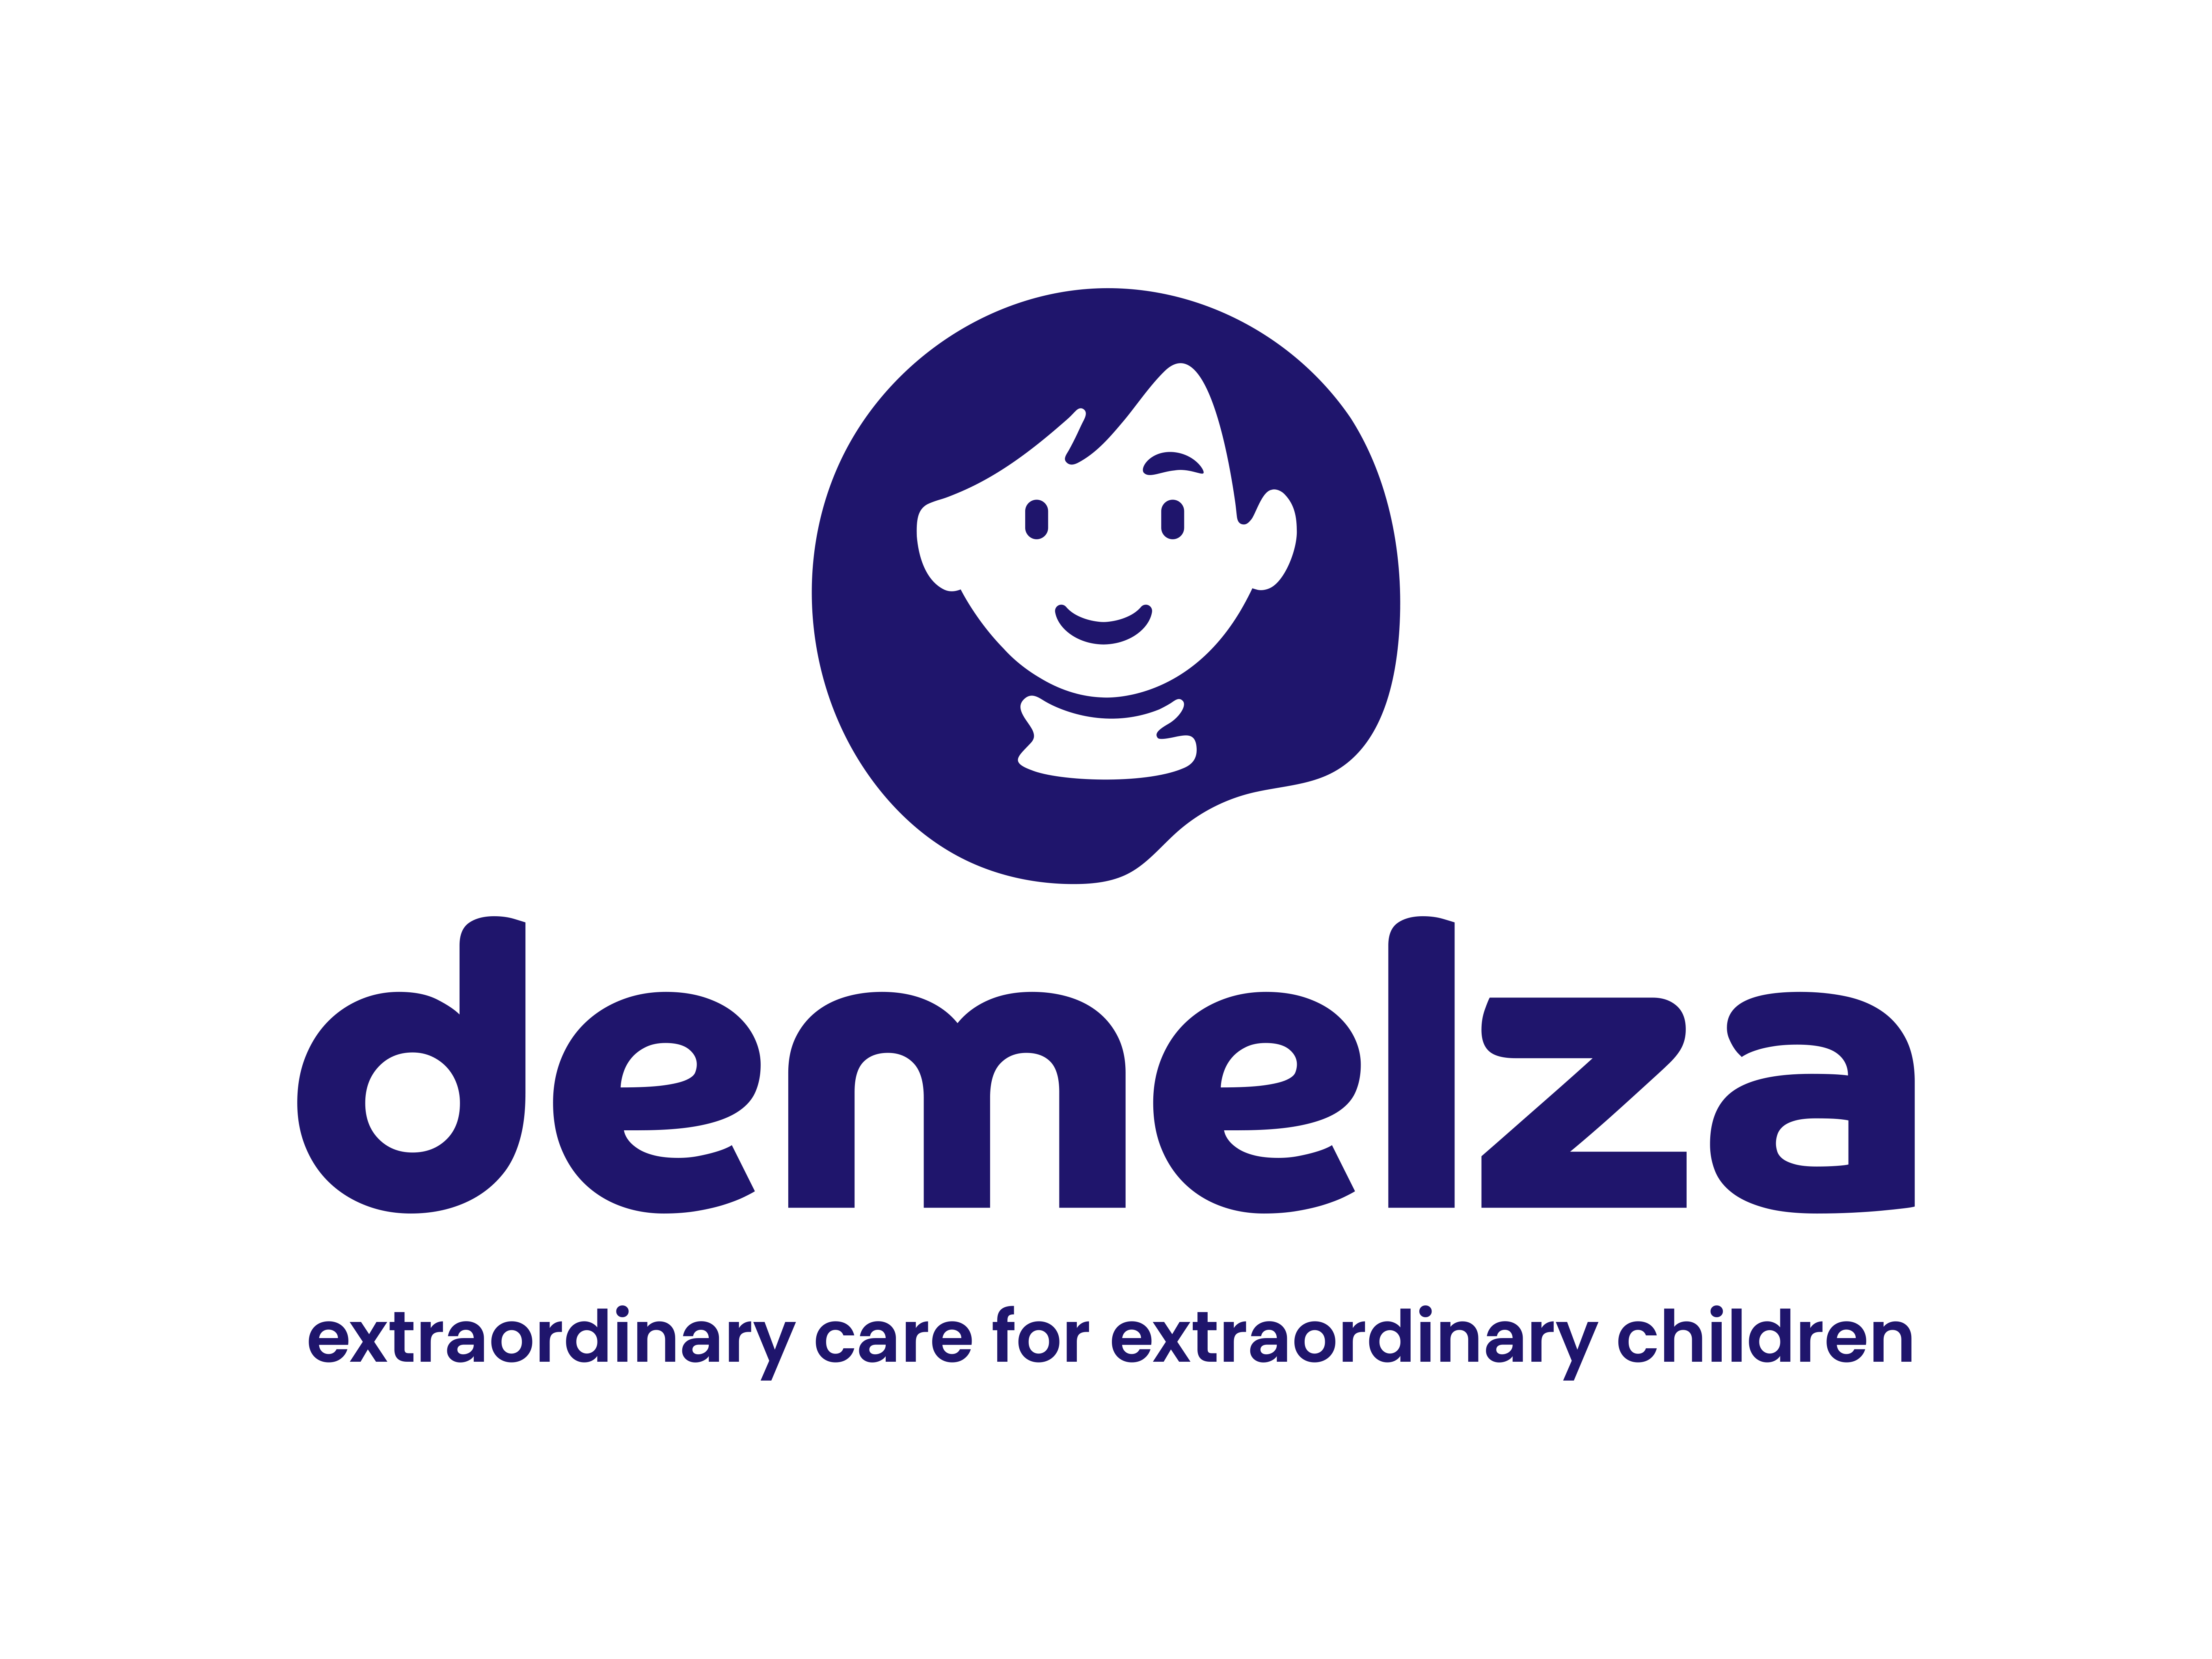 Demelza Hospice